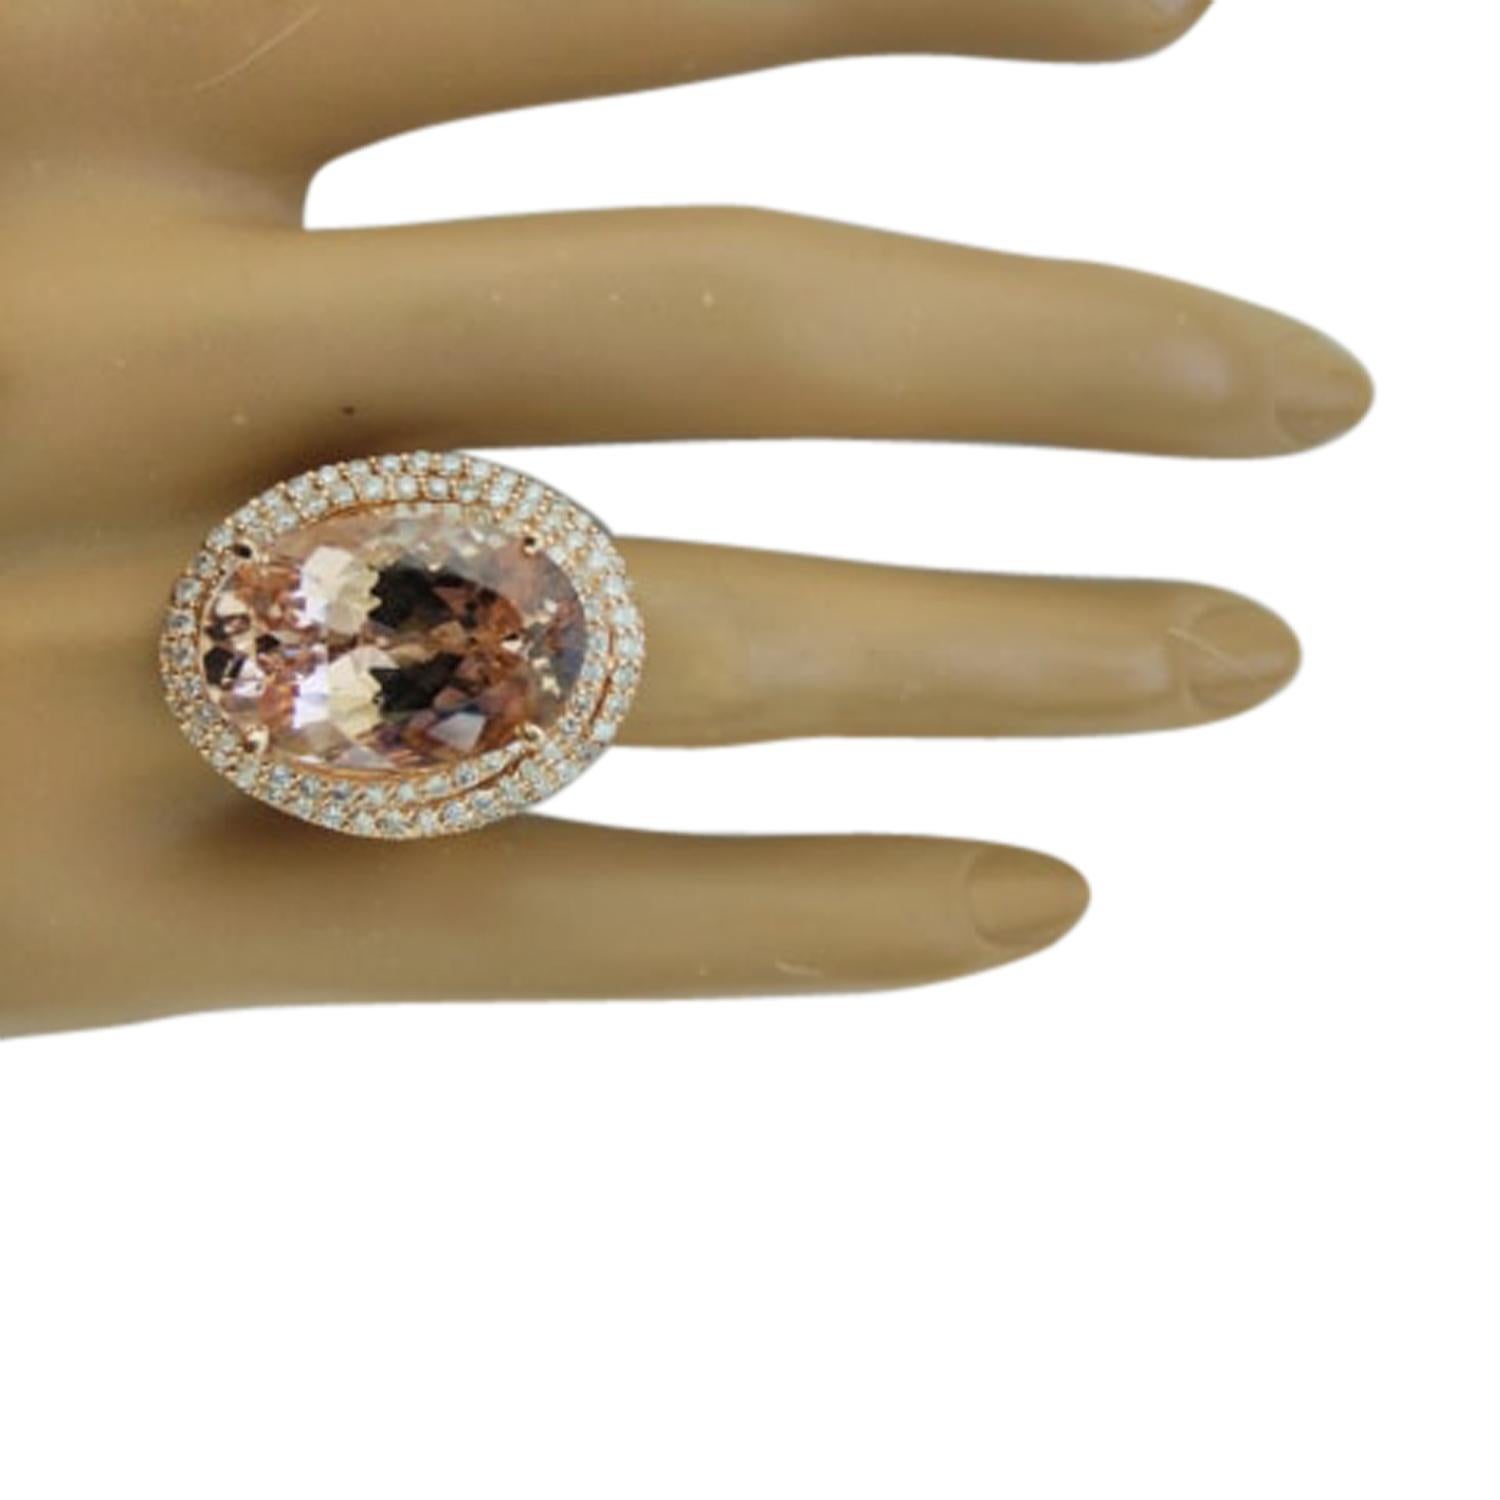 14.58 Carat Natural Morganite 14 Karat Solid Rose Gold Diamond Ring
Stamped: 14K 
Total Ring Weight: 12 Grams 
Morganite Weight: 13.38 Carat (18.00x13.00 Millimeters)  
Diamond Weight: 1.20 Carat (F-G Color, VS2-SI1 Clarity )
quantity: 92
Face